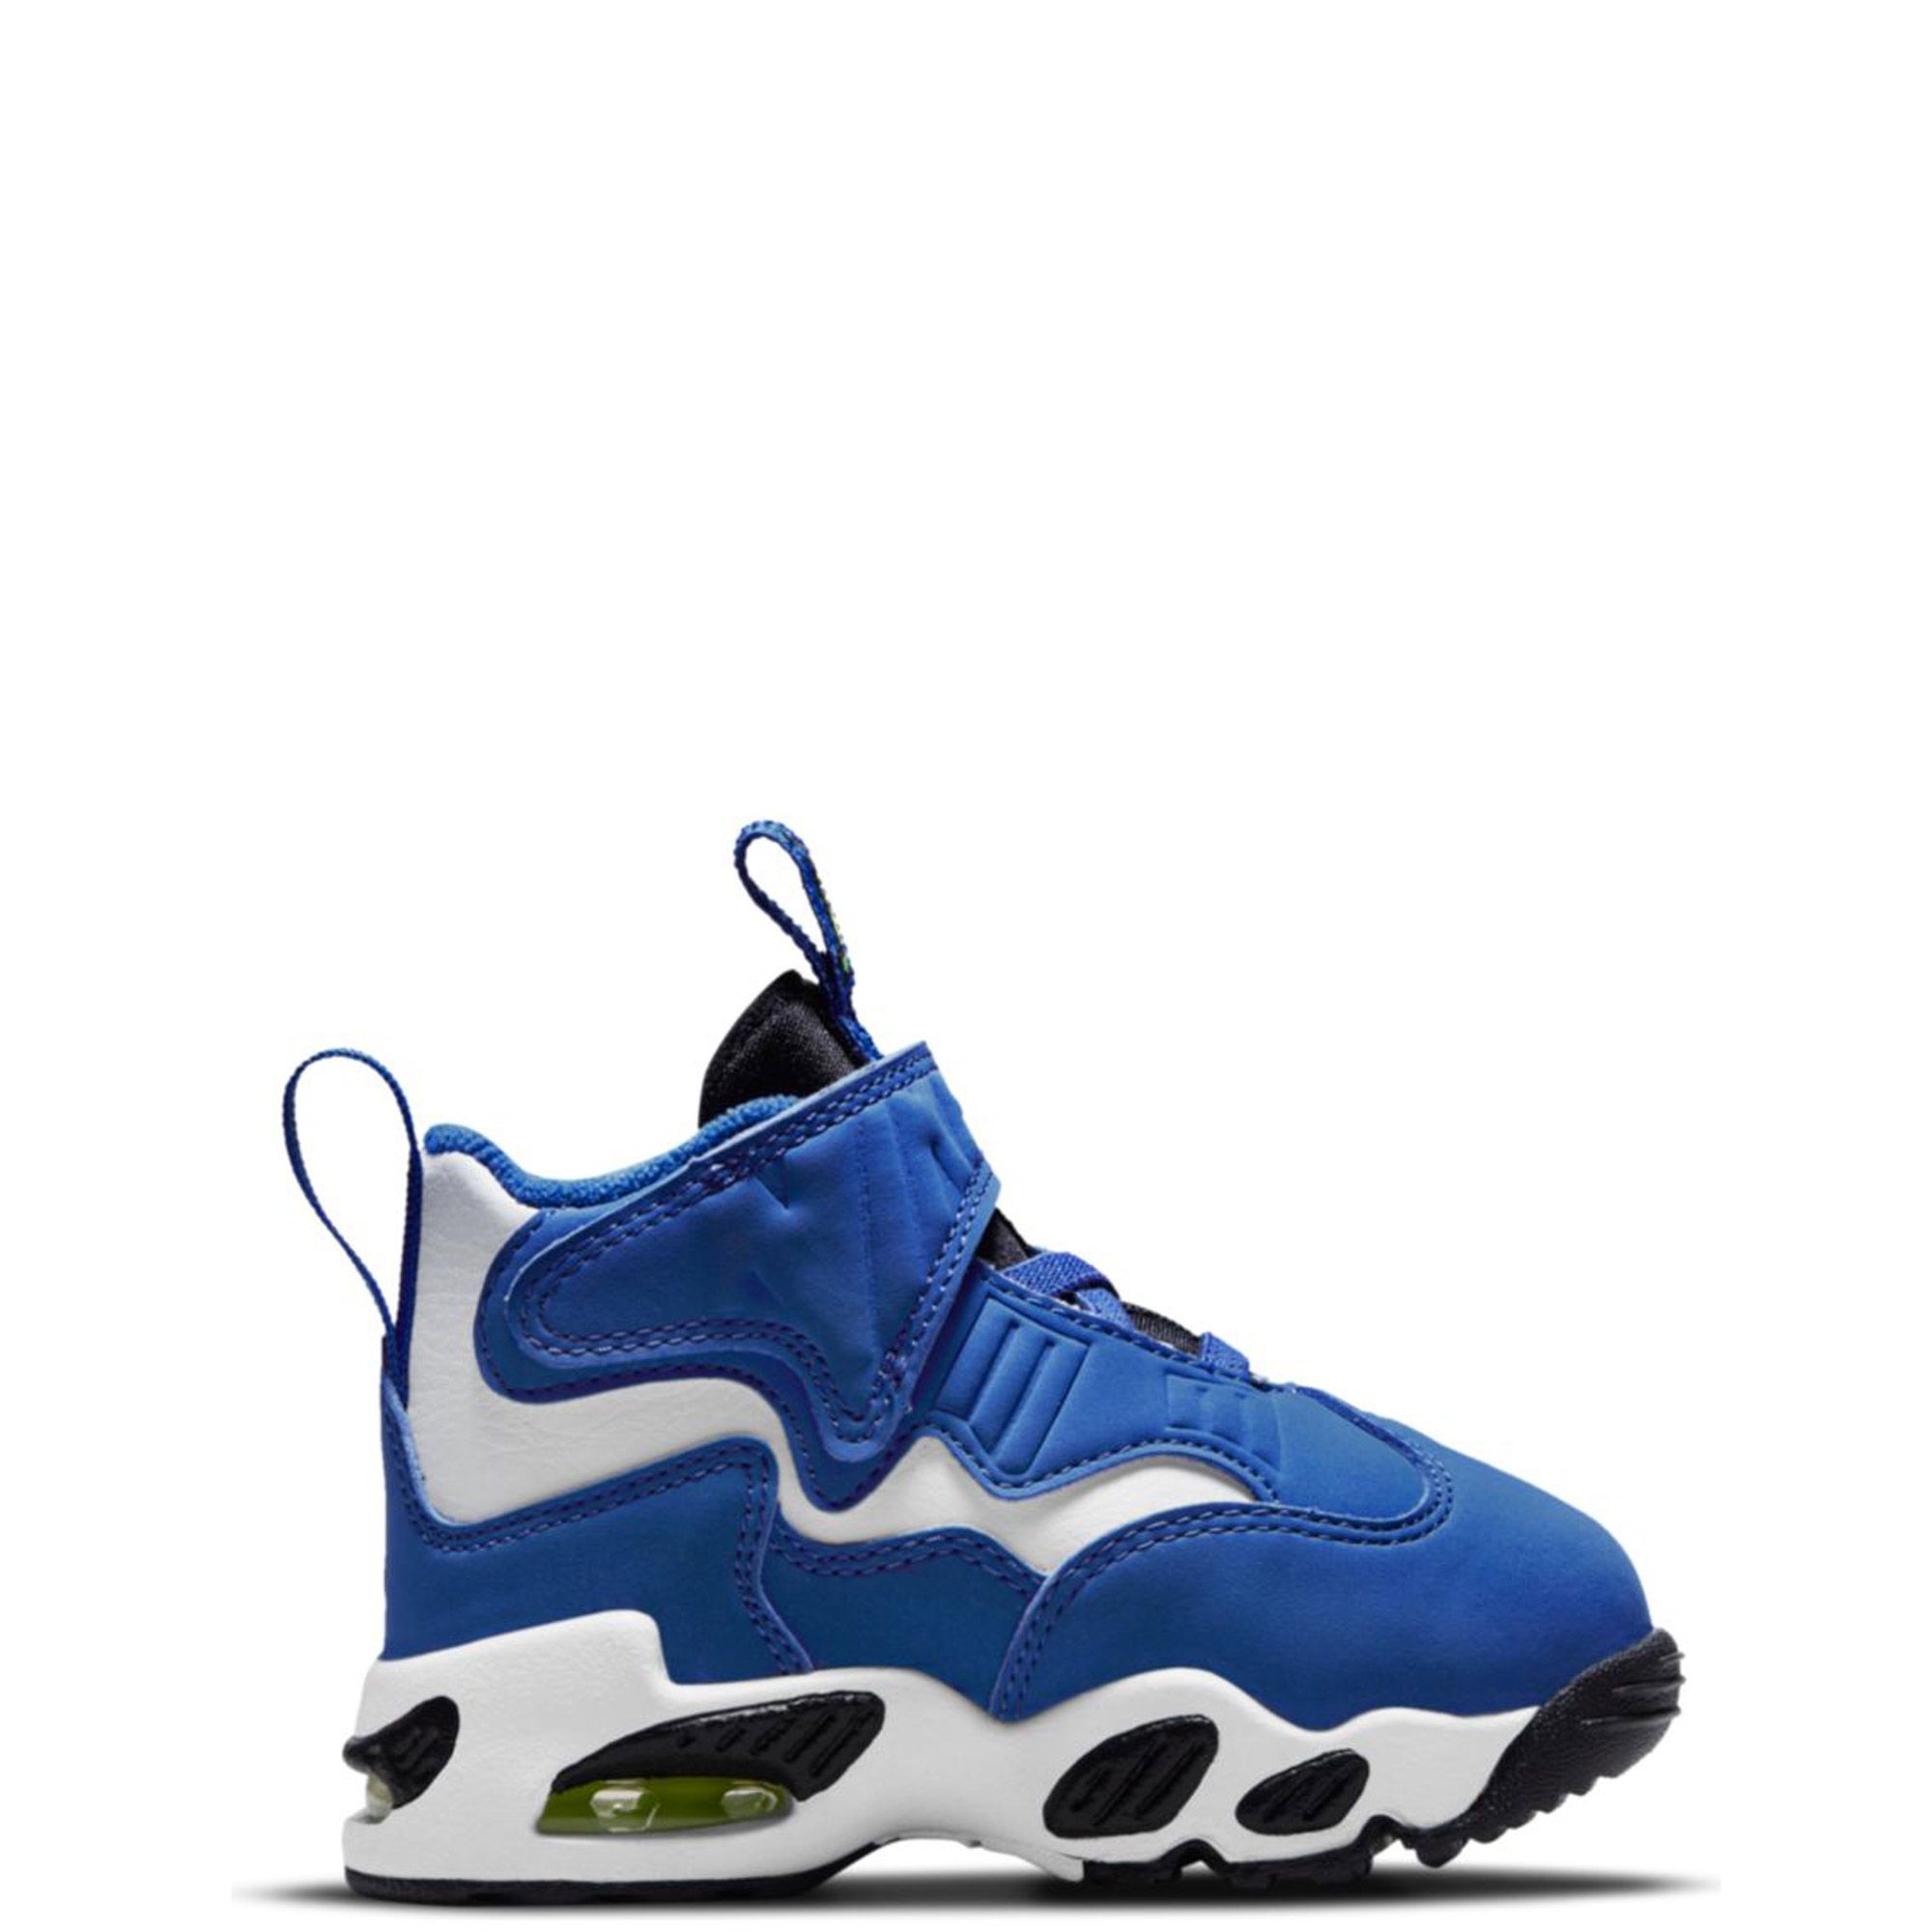 Nike Air Max JR Griffey Swingman Blue/Black Shoes Size 5.5 Style: 443965-004